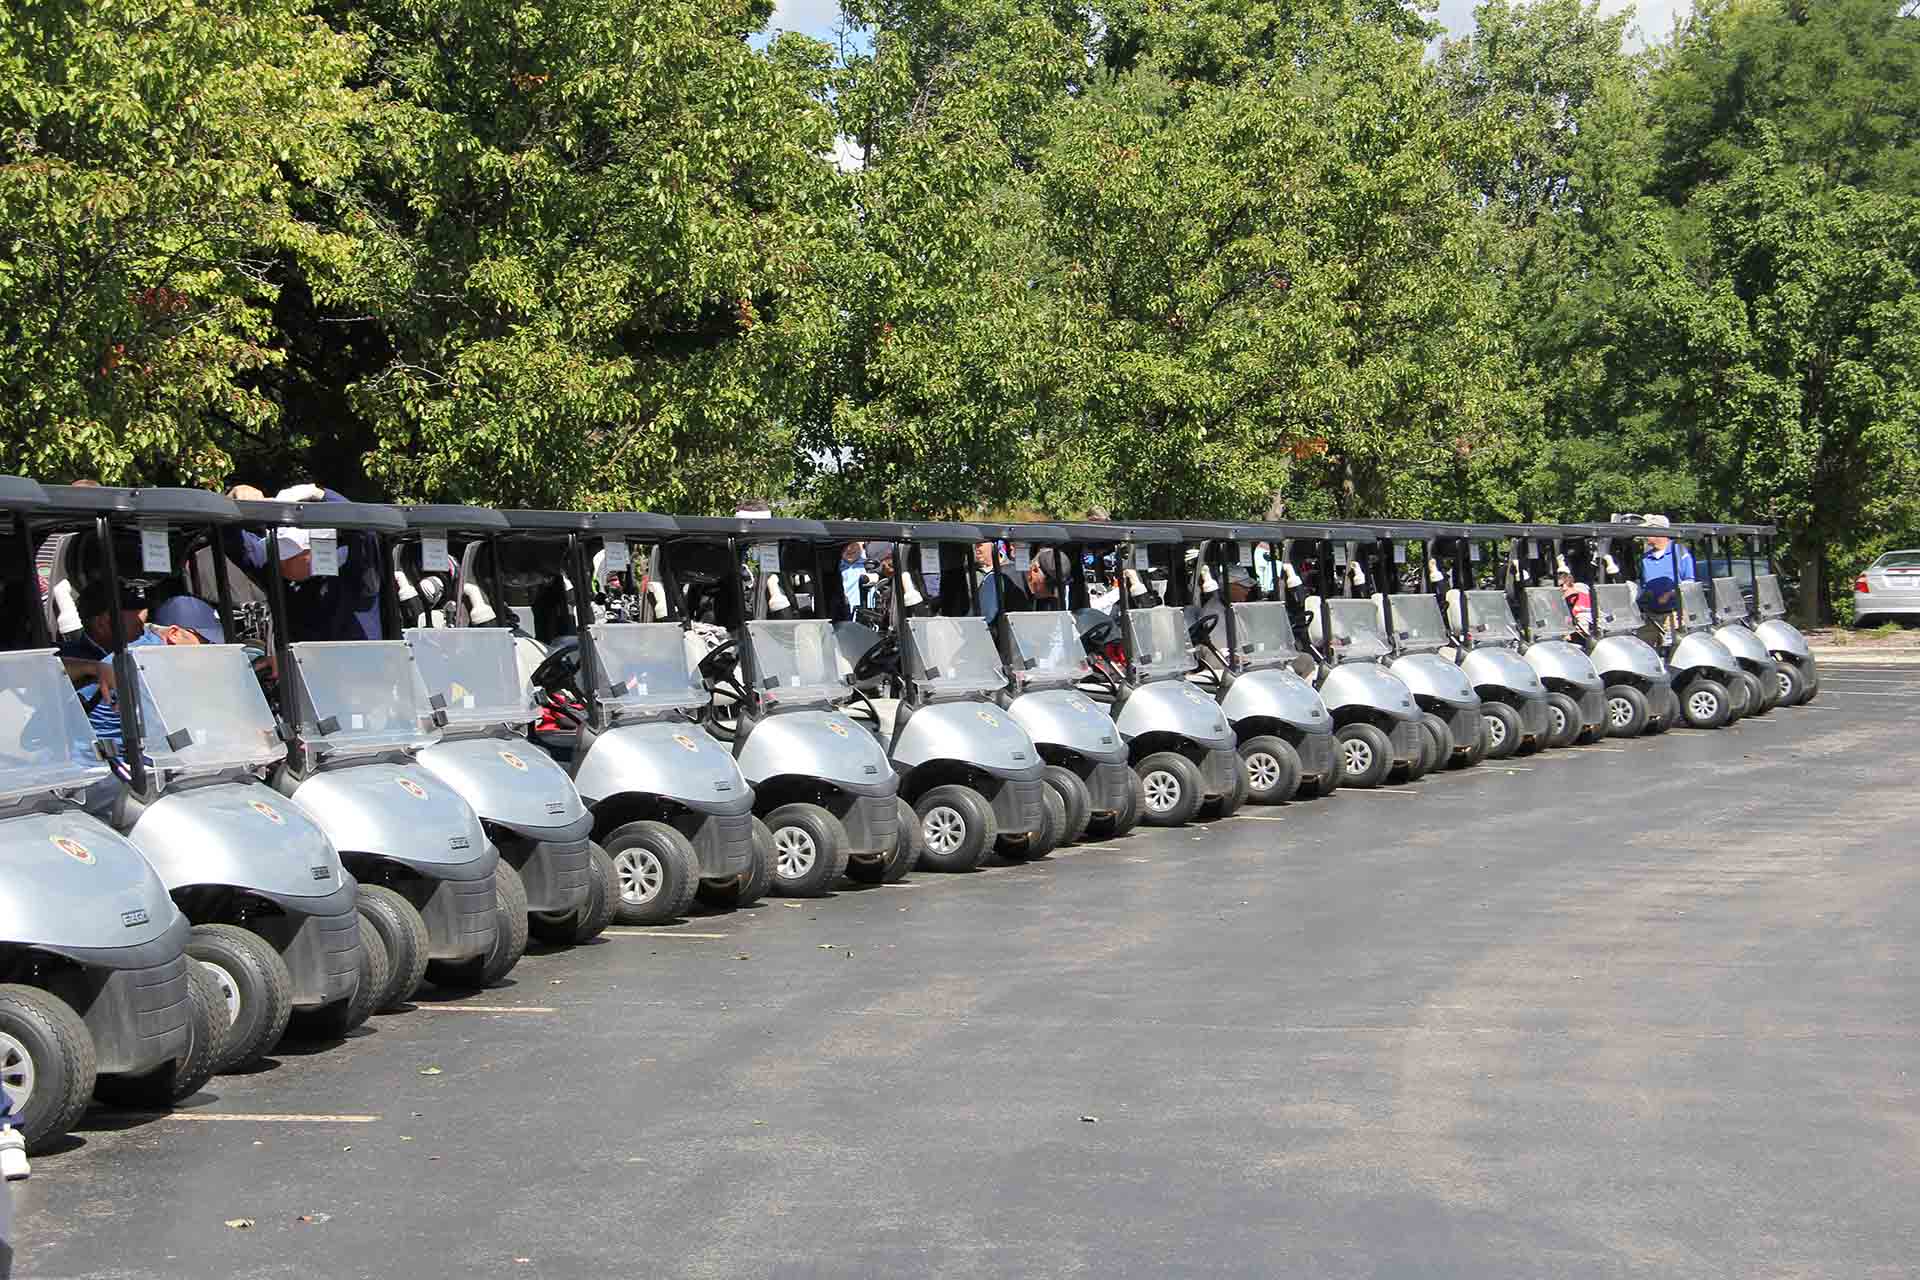 2022-Endowment-Golf-Classic-golf-carts